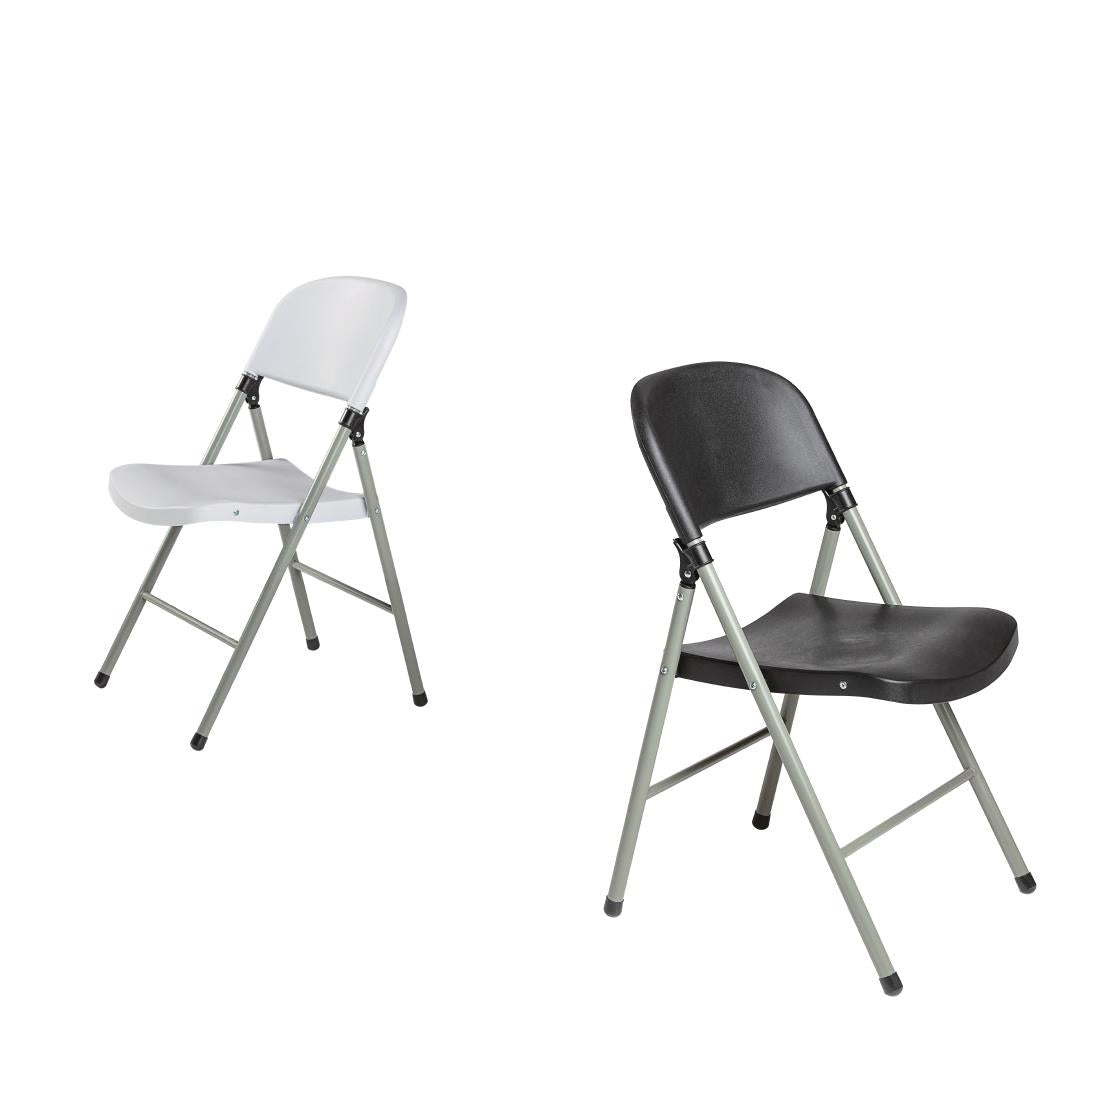 Bolero Foldaway Utility Chairs (Pack of 2) JD Catering Equipment Solutions Ltd